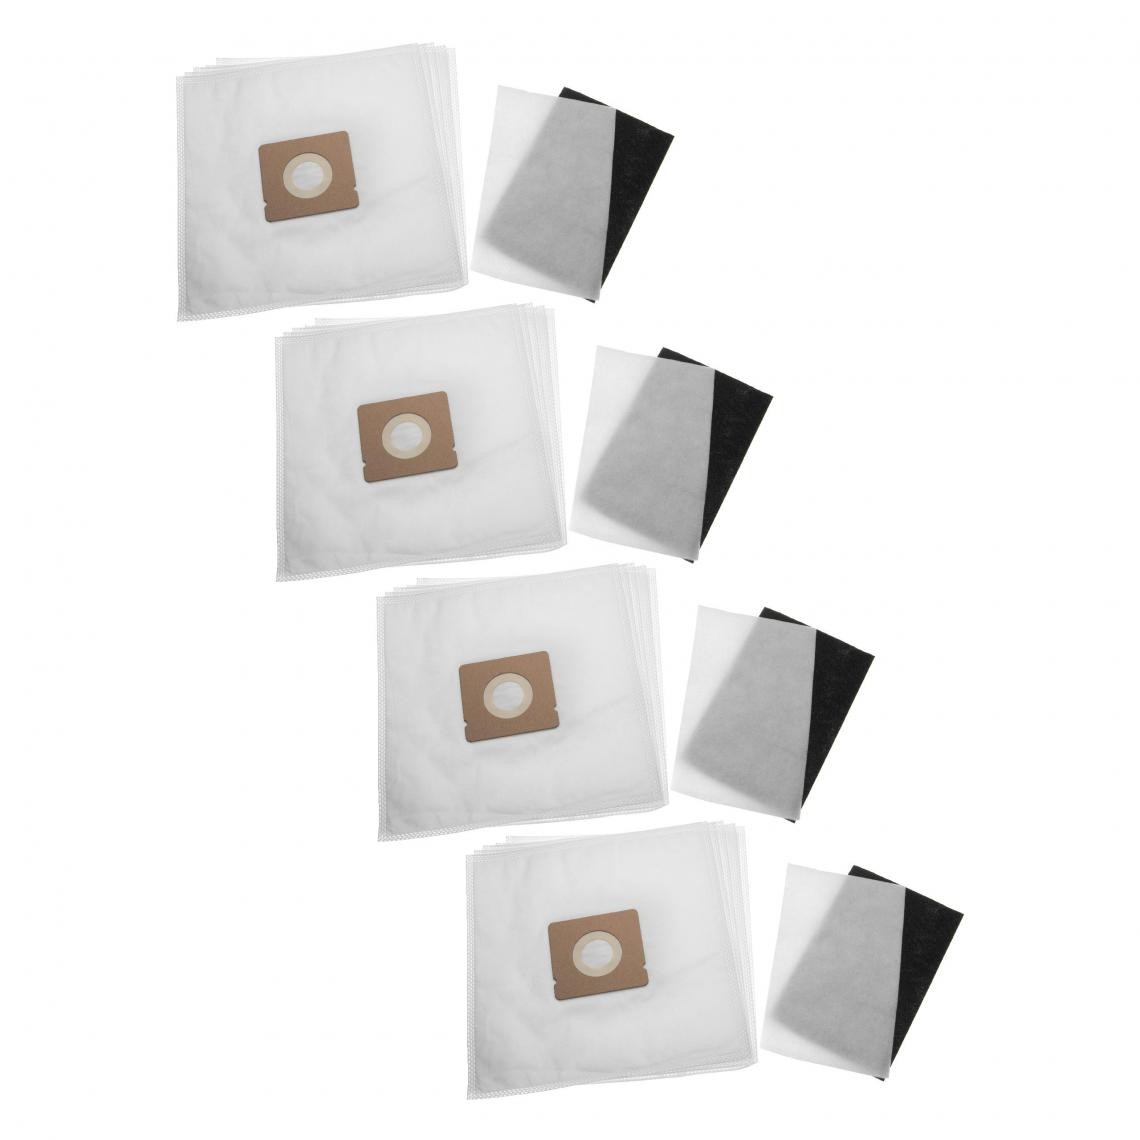 Vhbw - vhbw Lot de sacs (microfibres non tissées) + filtre avec 24 pièces compatible avec Moulinex MO152601/4Q0, MO152711/4Q0, MO152711, MO1533 aspirateur - Accessoire entretien des sols